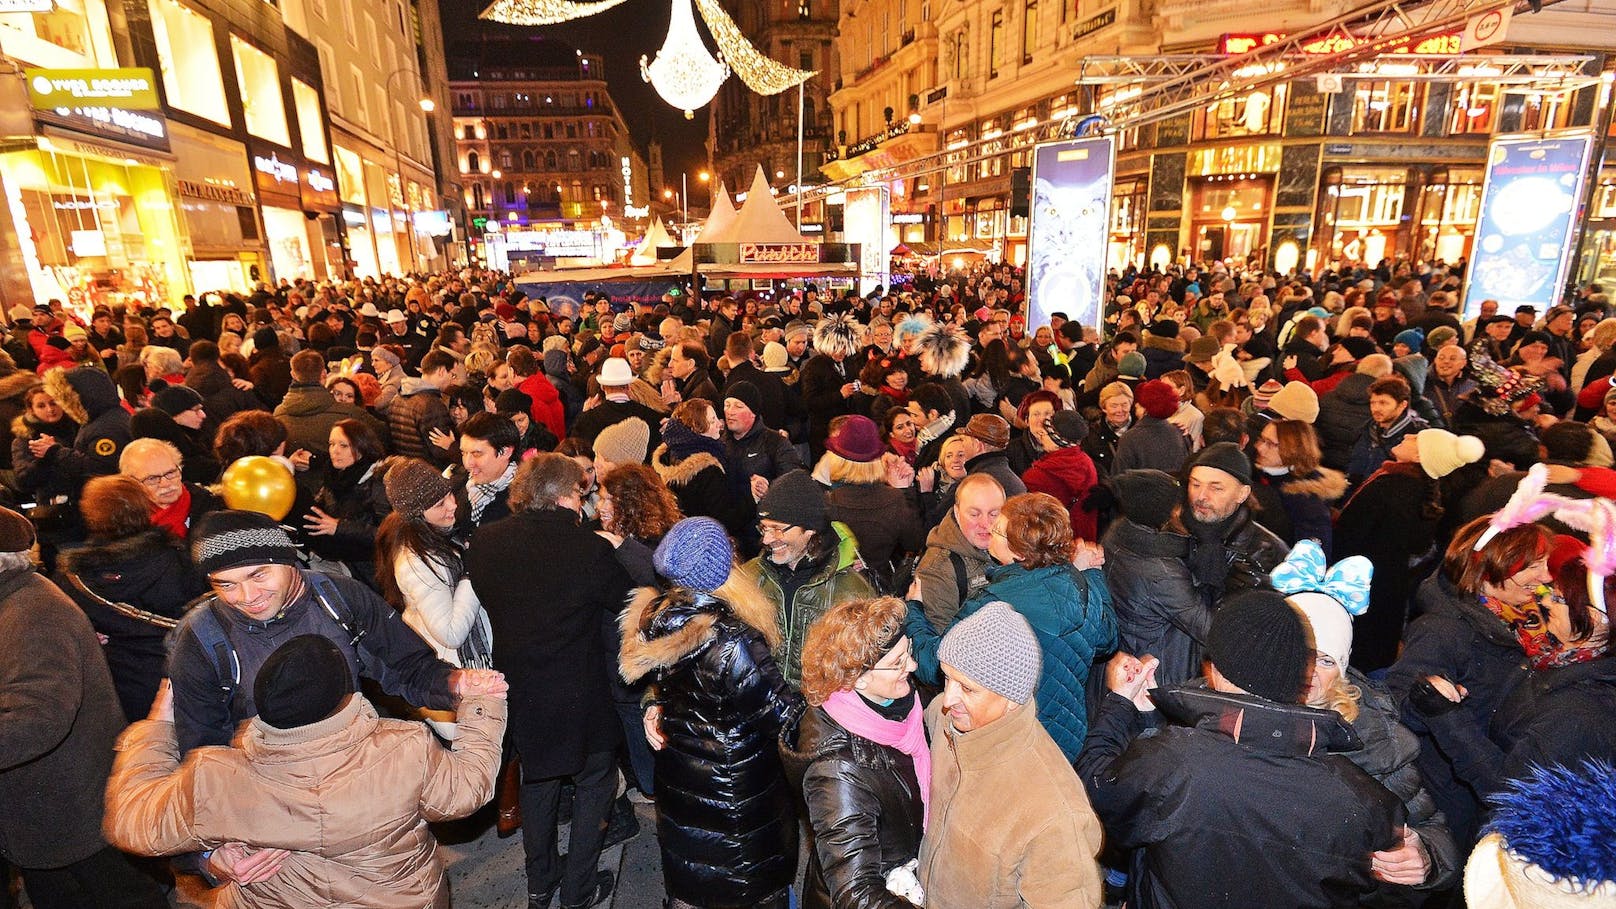 Terrorwarnung gilt in Wien auch bei Silvester-Events